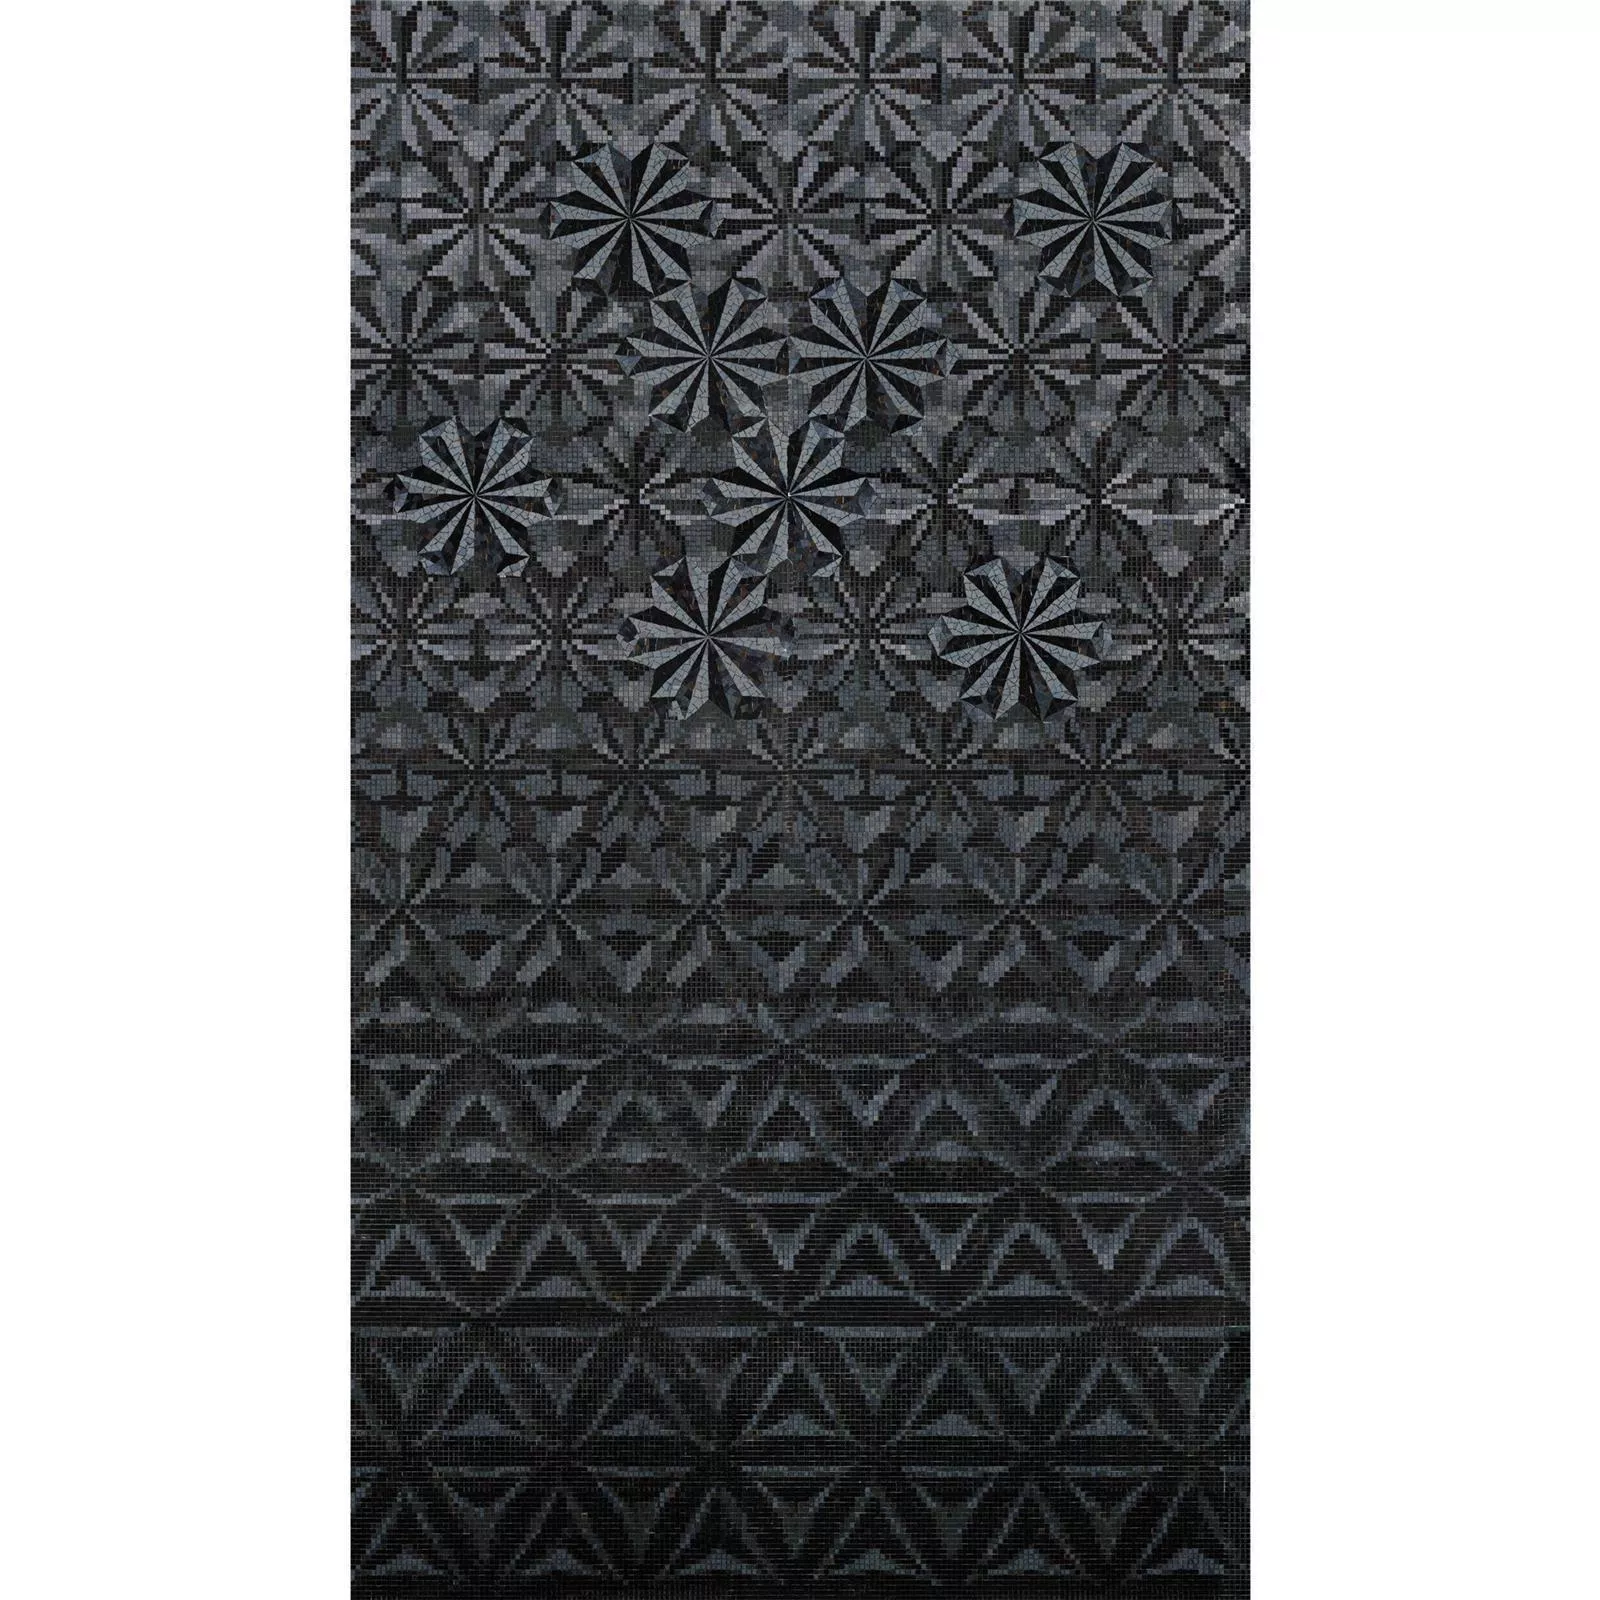 Skleněná Mozaika Obrázek Magicflower Black 140x240cm